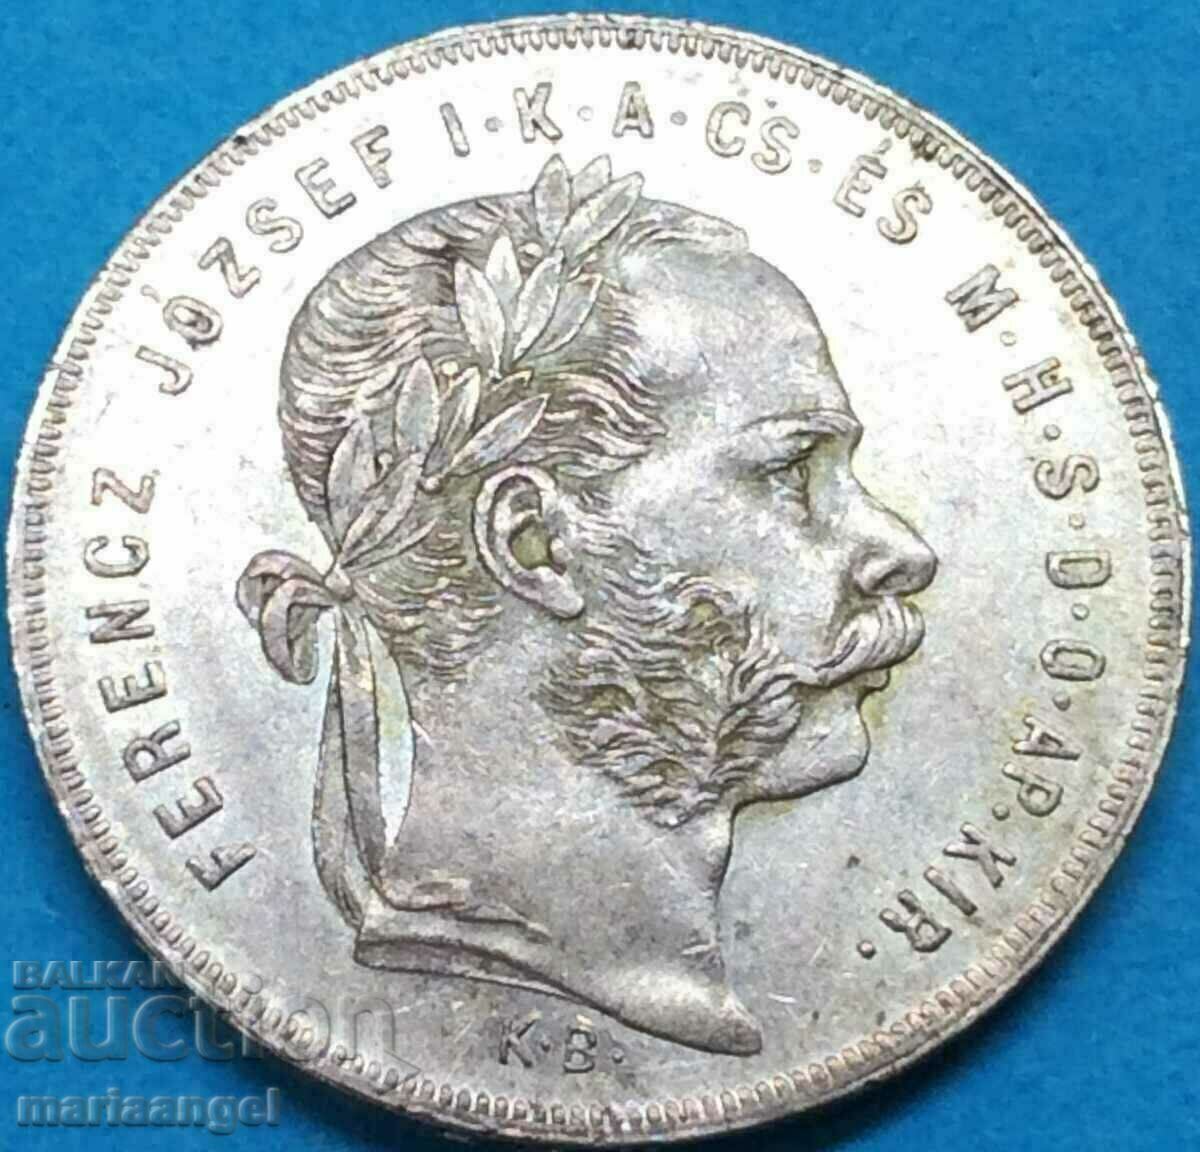 Hungary 1 forint 1876 silver - rare year